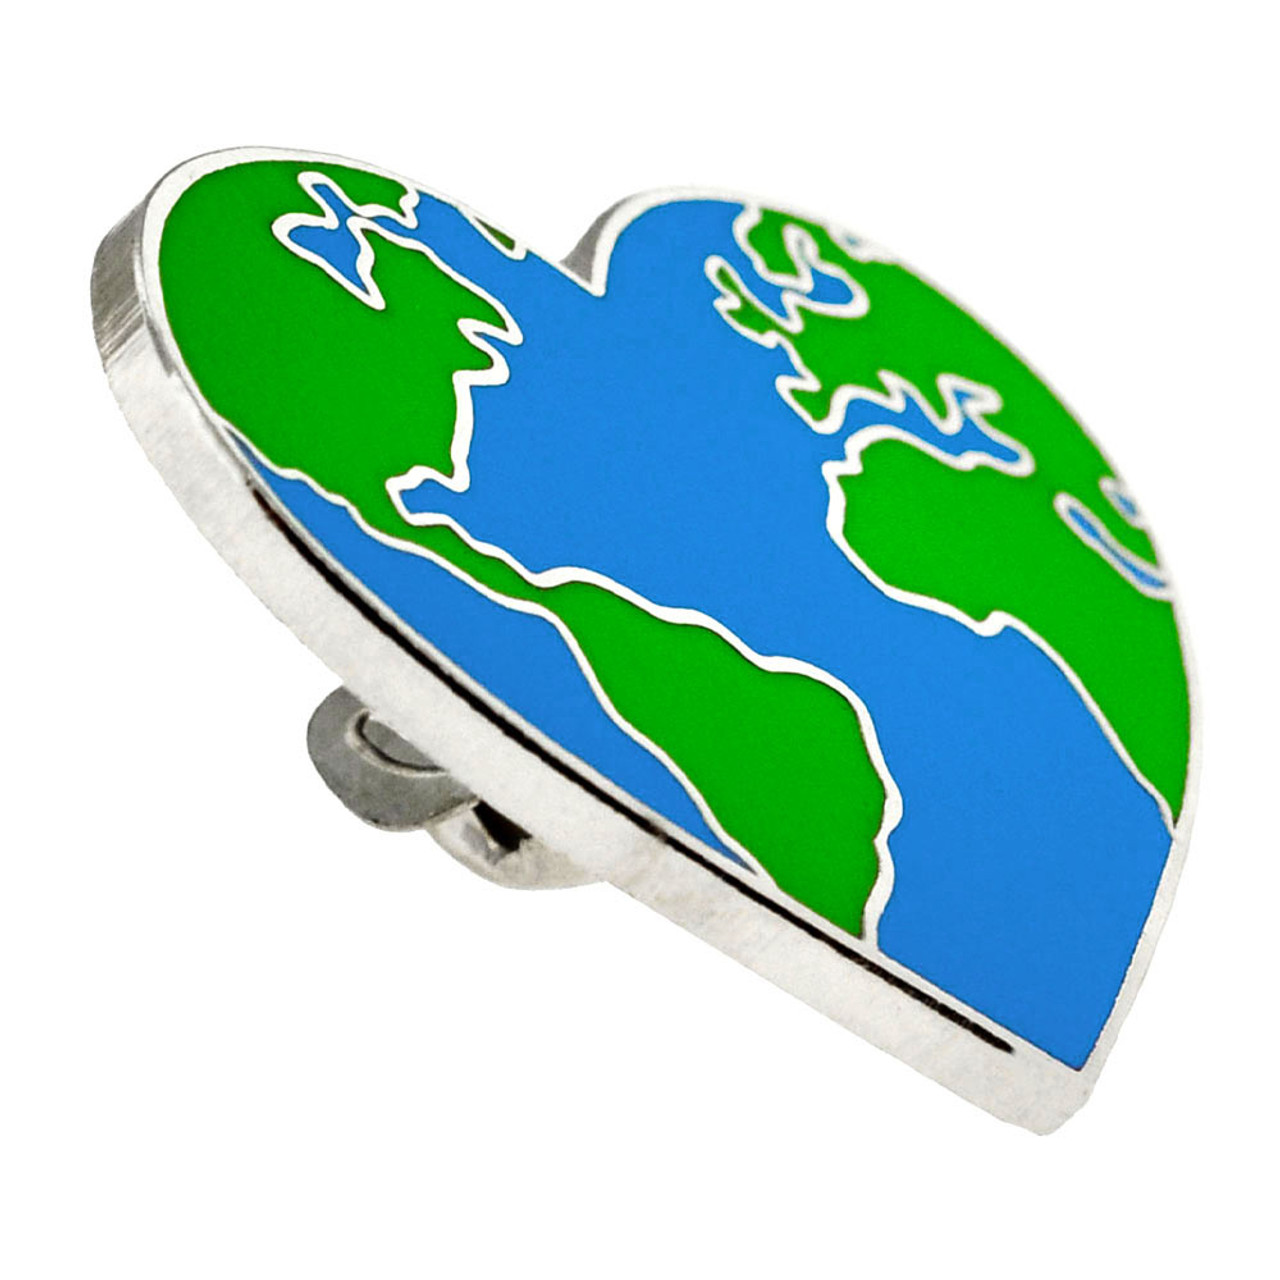 heart shaped earth